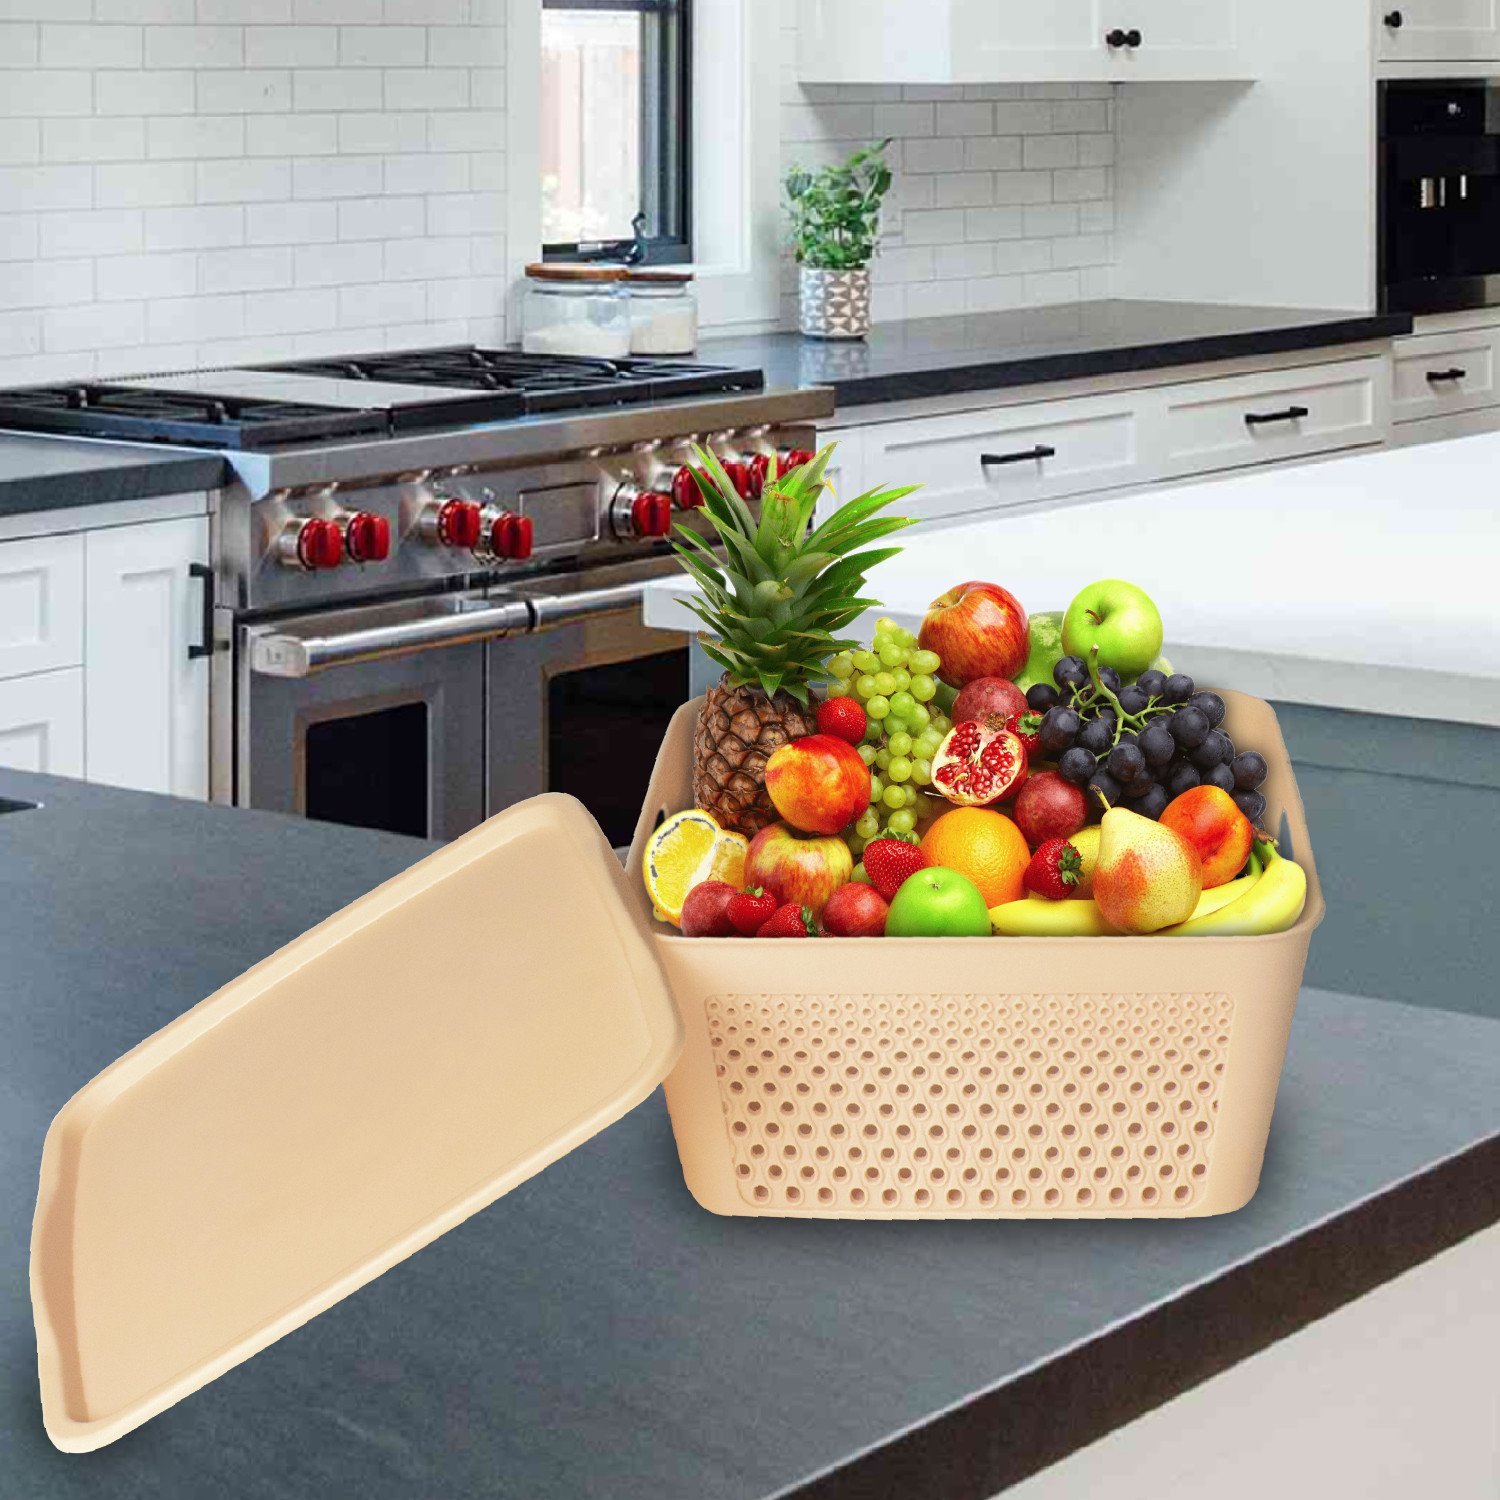 Kuber Industries Netted Design Unbreakable Multipurpose Square Shape Plastic Storage Baskets with lid Medium(Beige)